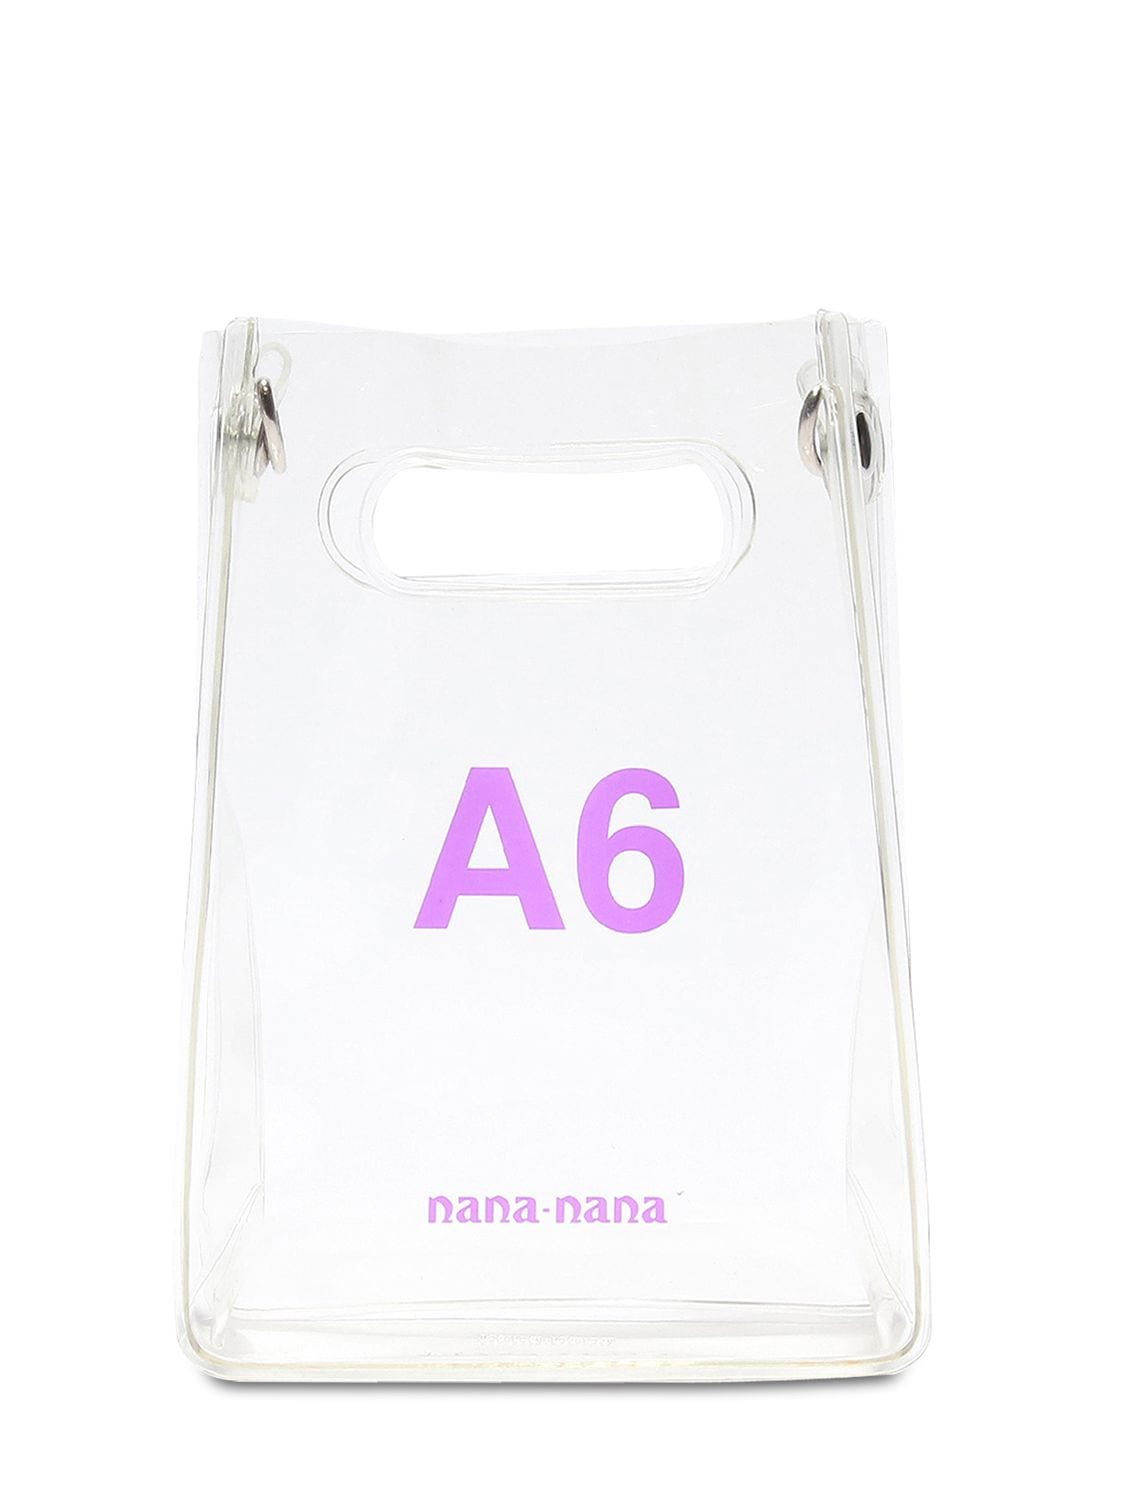 Nana-nana A6 Pvc Shopping Bag In Transparent